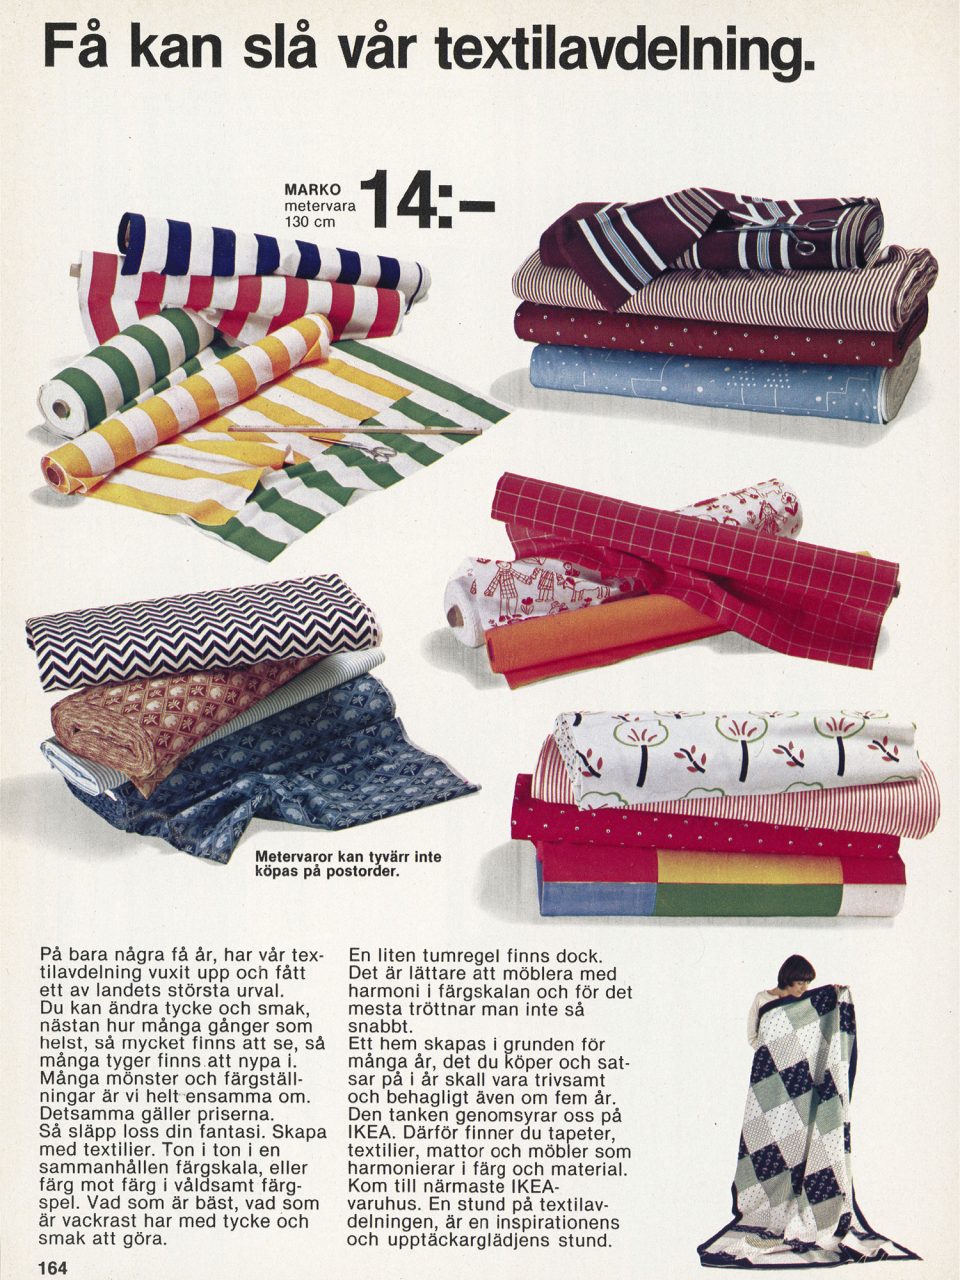 1979 IKEA catalogue page, titled 